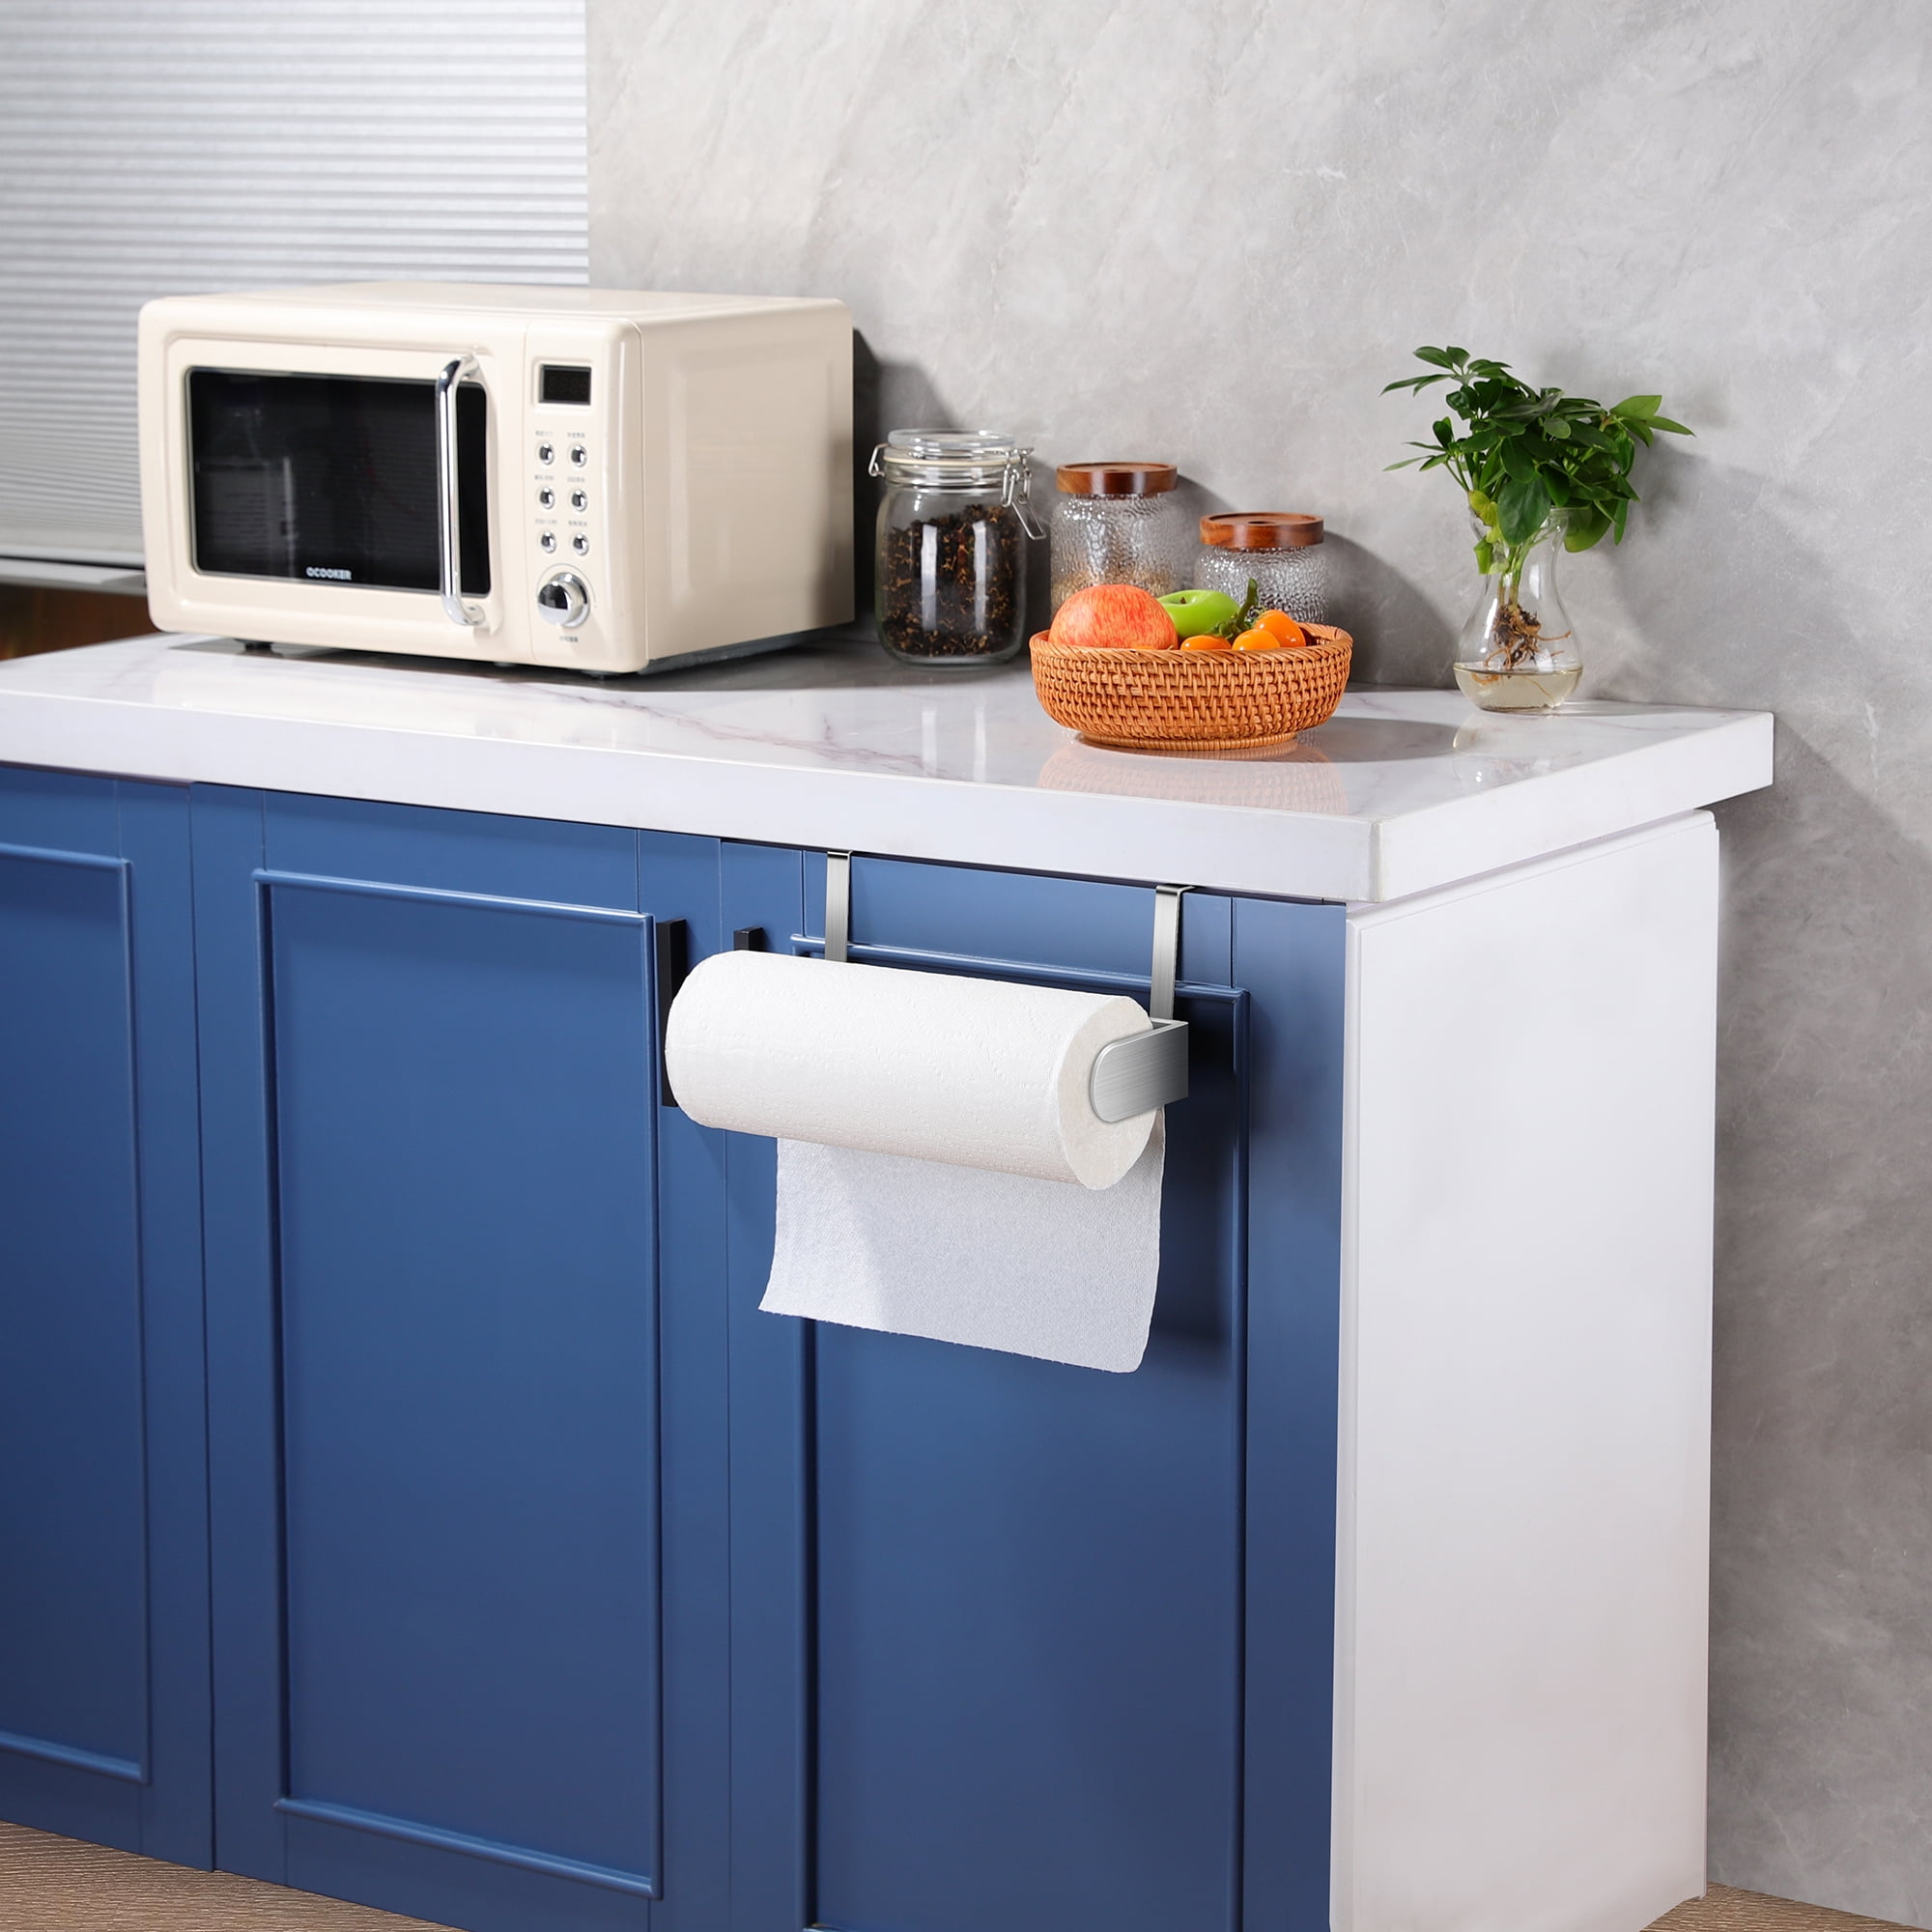 YIGII Under Cabinet Paper Towel Holder KH018Y - Tools for Kitchen & Bathroom